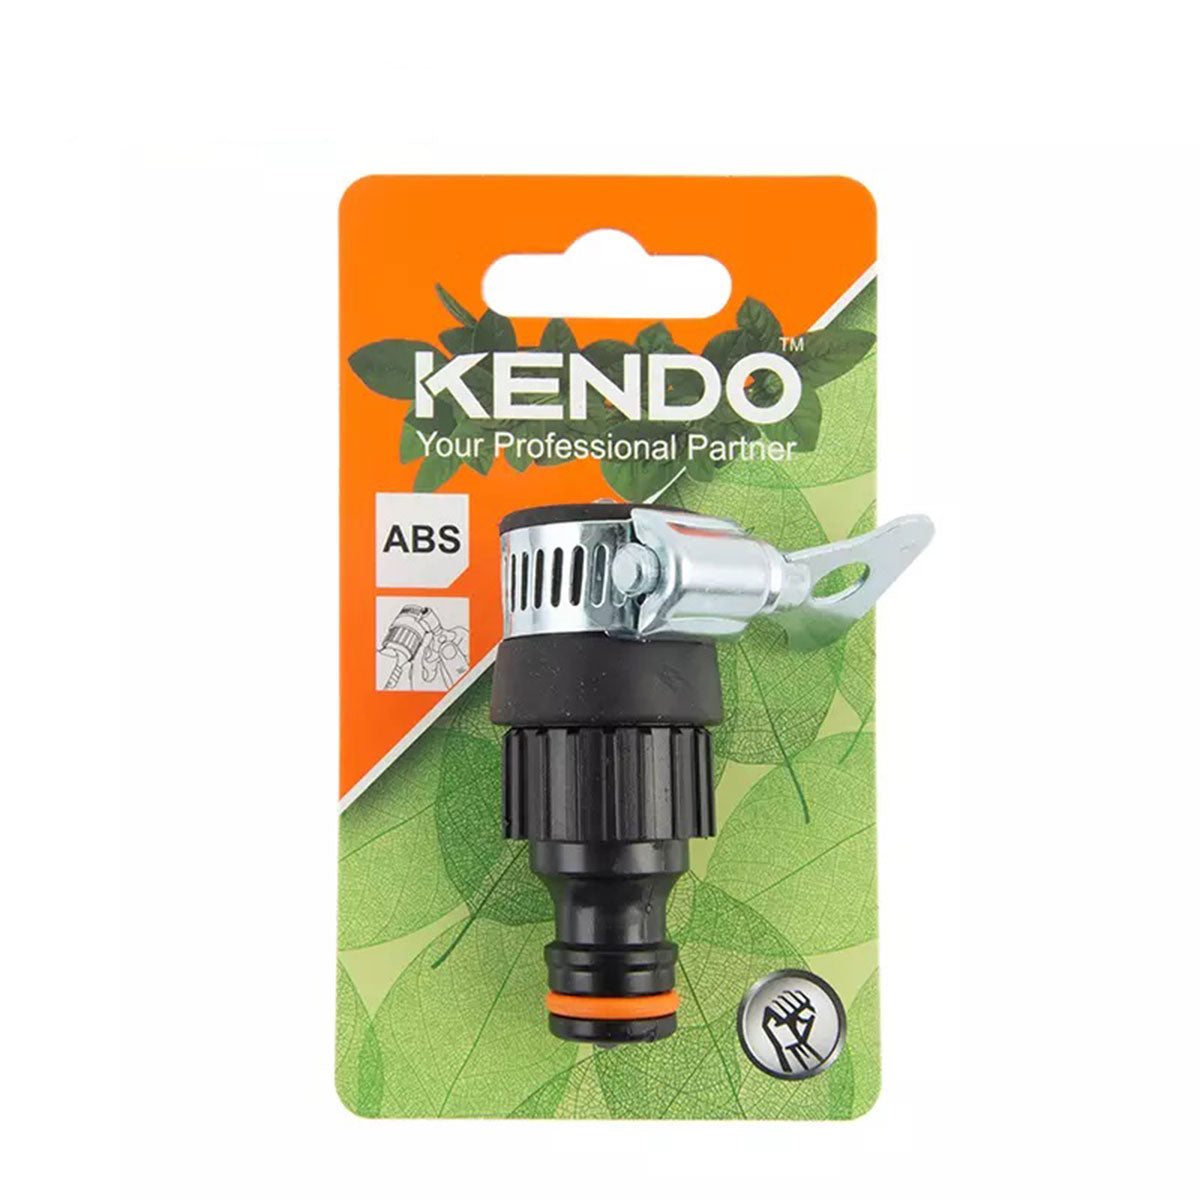 Kendo Round Tap Connector